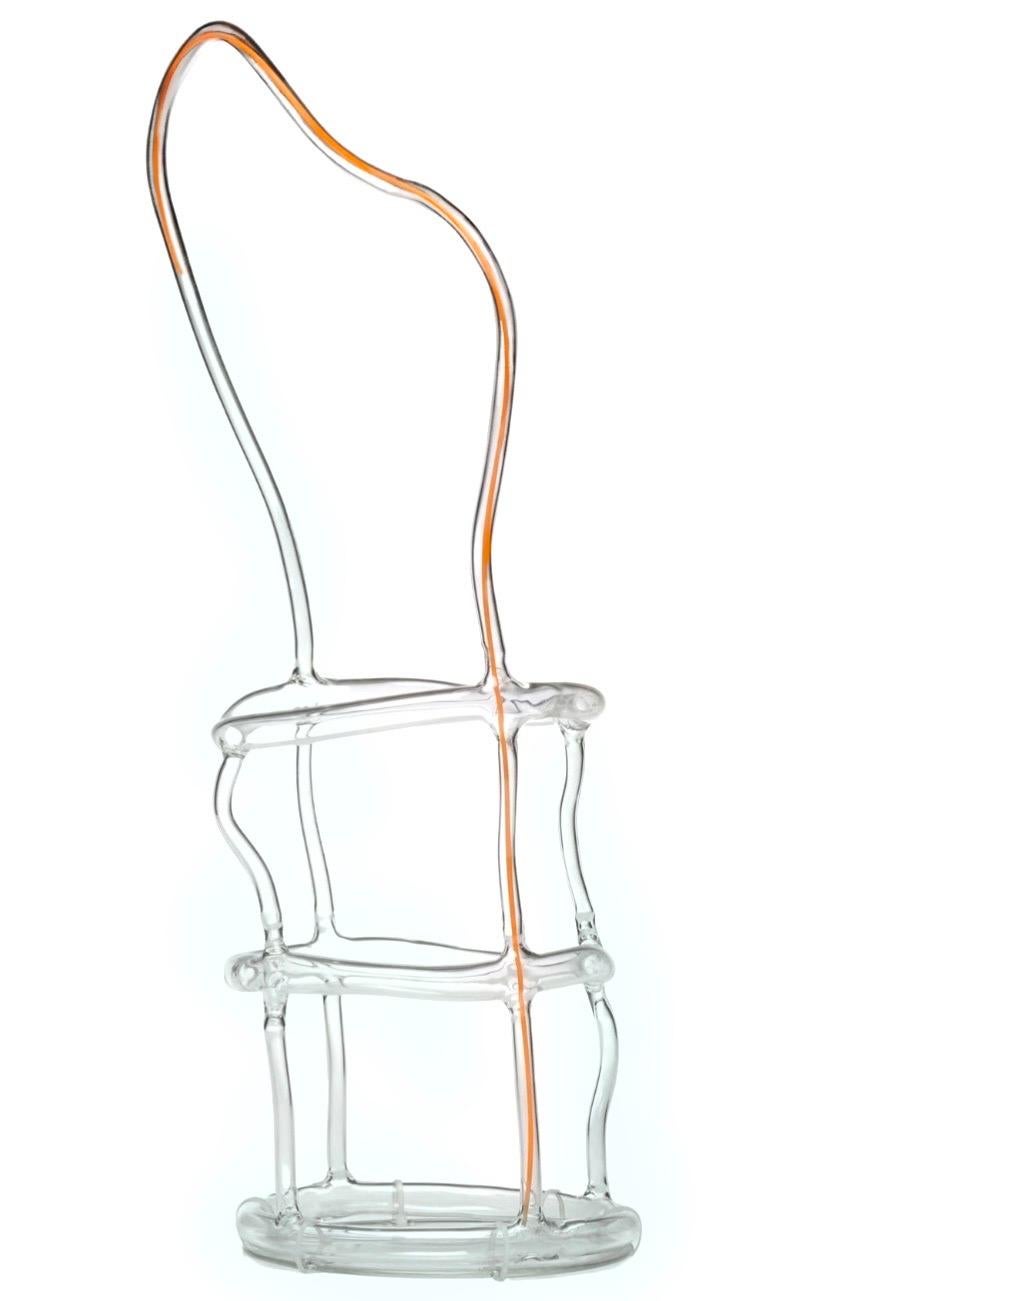 Organic Modern Andrea Branzi Orange Canaries Basket #7, Fused Glass Sculpture, 2008 For Sale